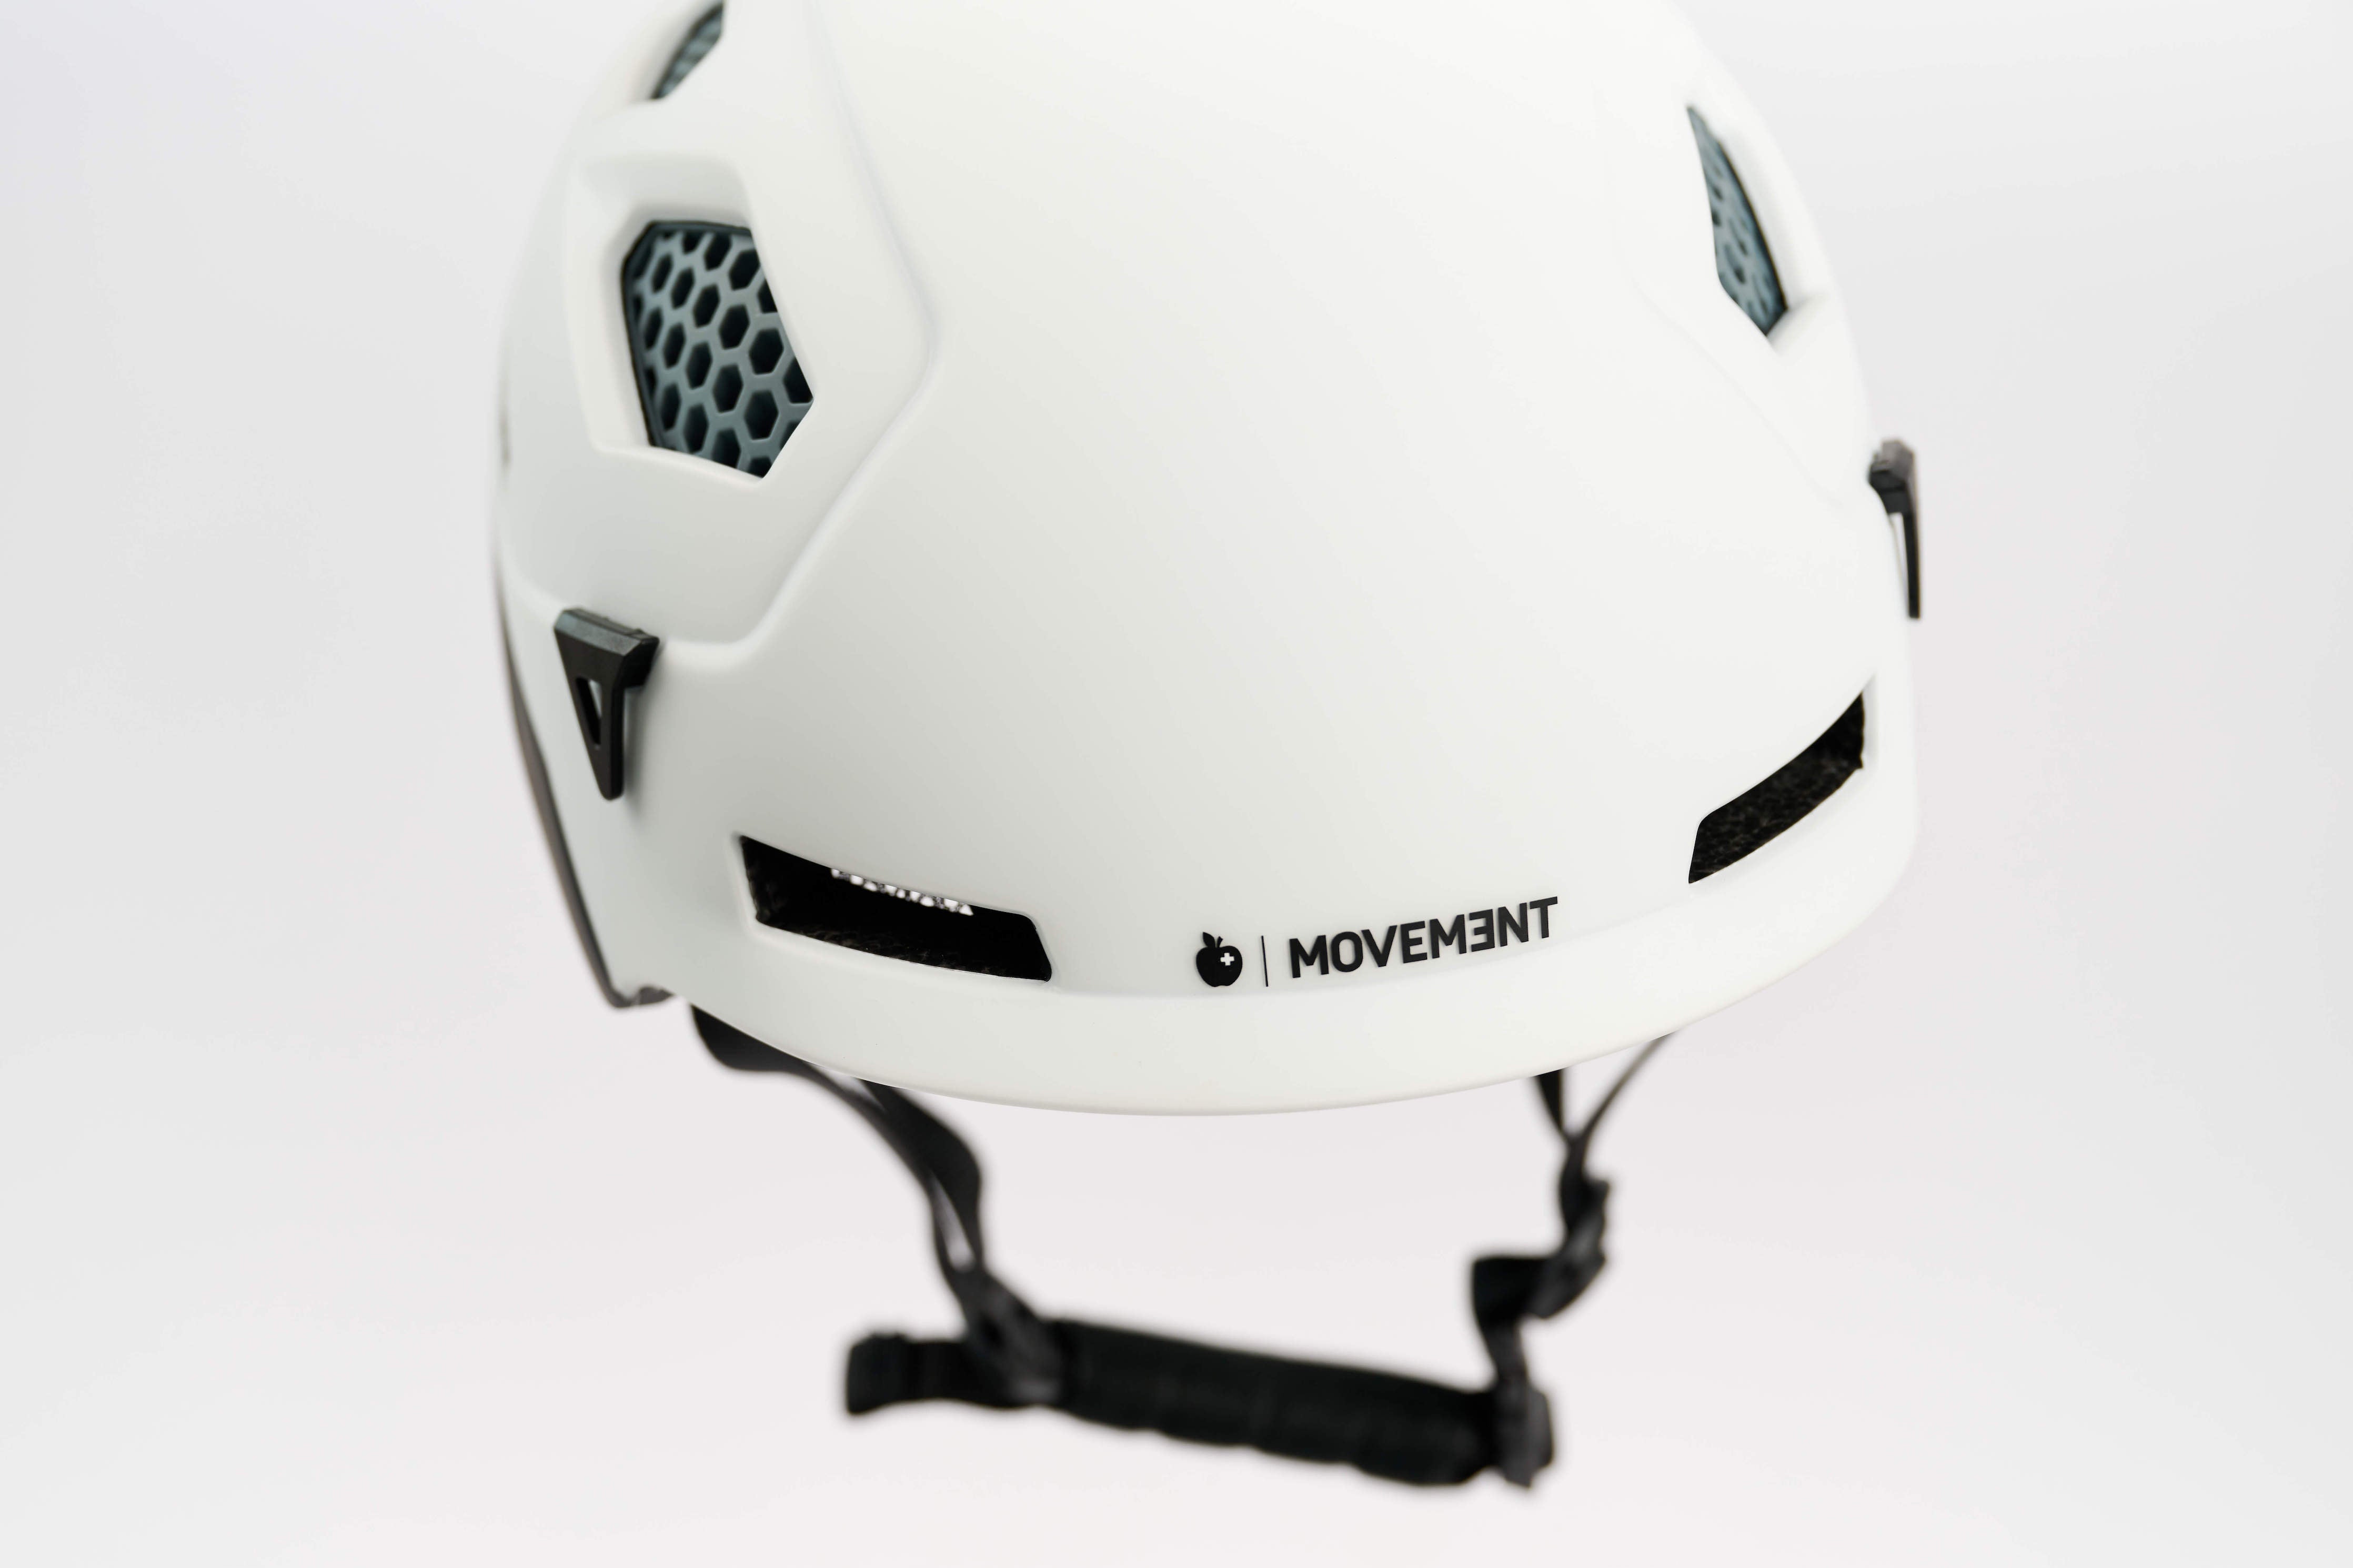 Unleash your potential with the Movement 3Tech Alpi helmet - built for peak performance.